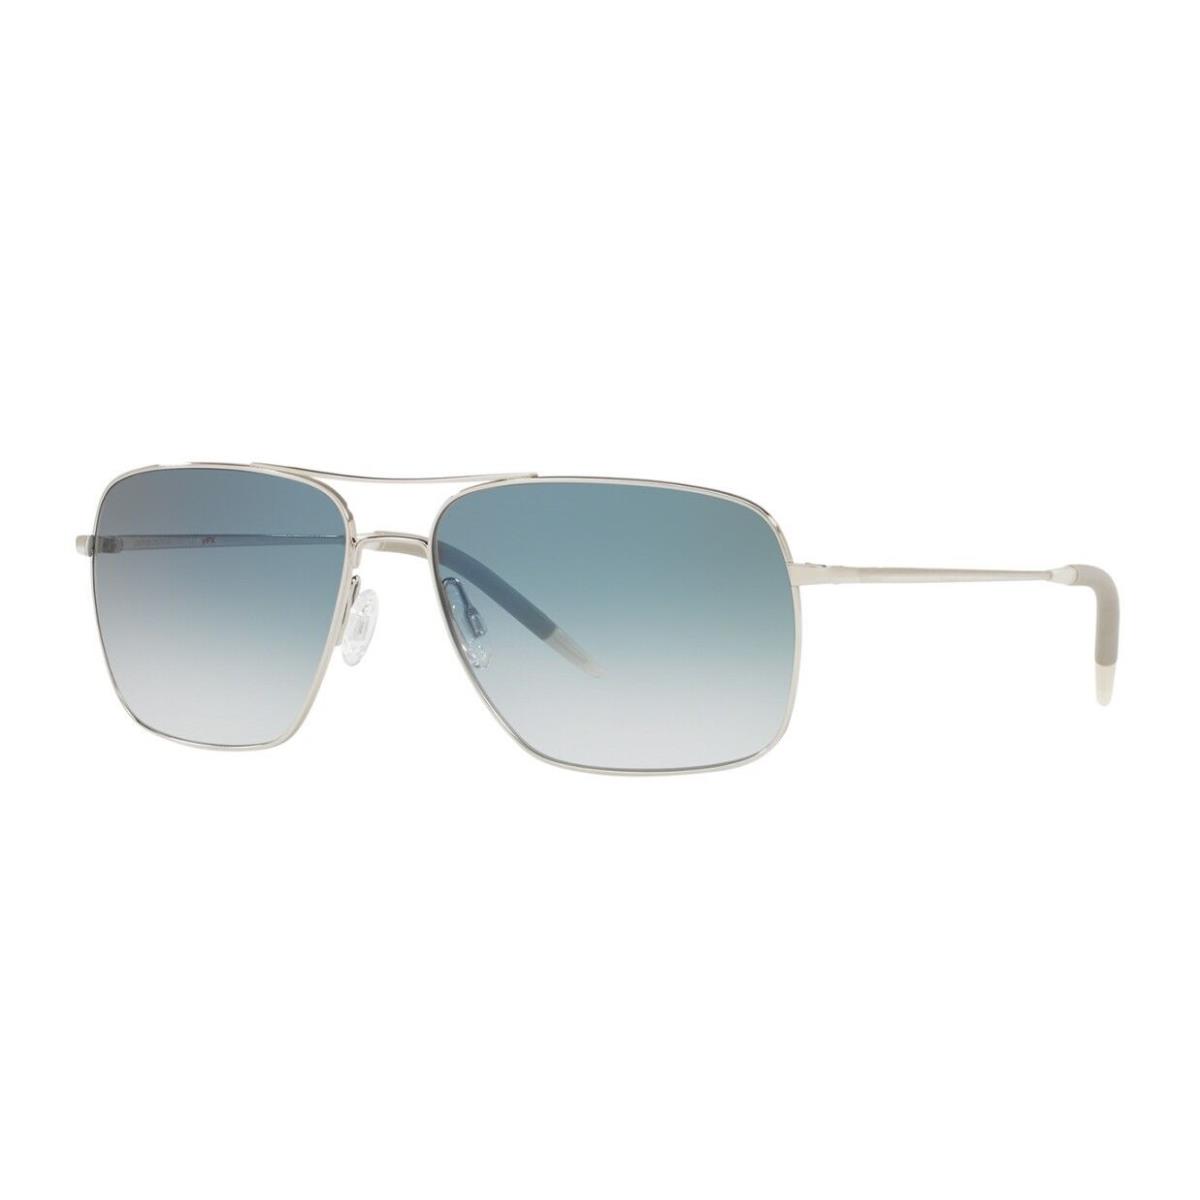 Oliver Peoples Clifton OV 1150S Silver/chrome Sapphire Vfx 5036/3F Sunglasses - Frame: Silver, Lens: Chrome Sapphire VFX